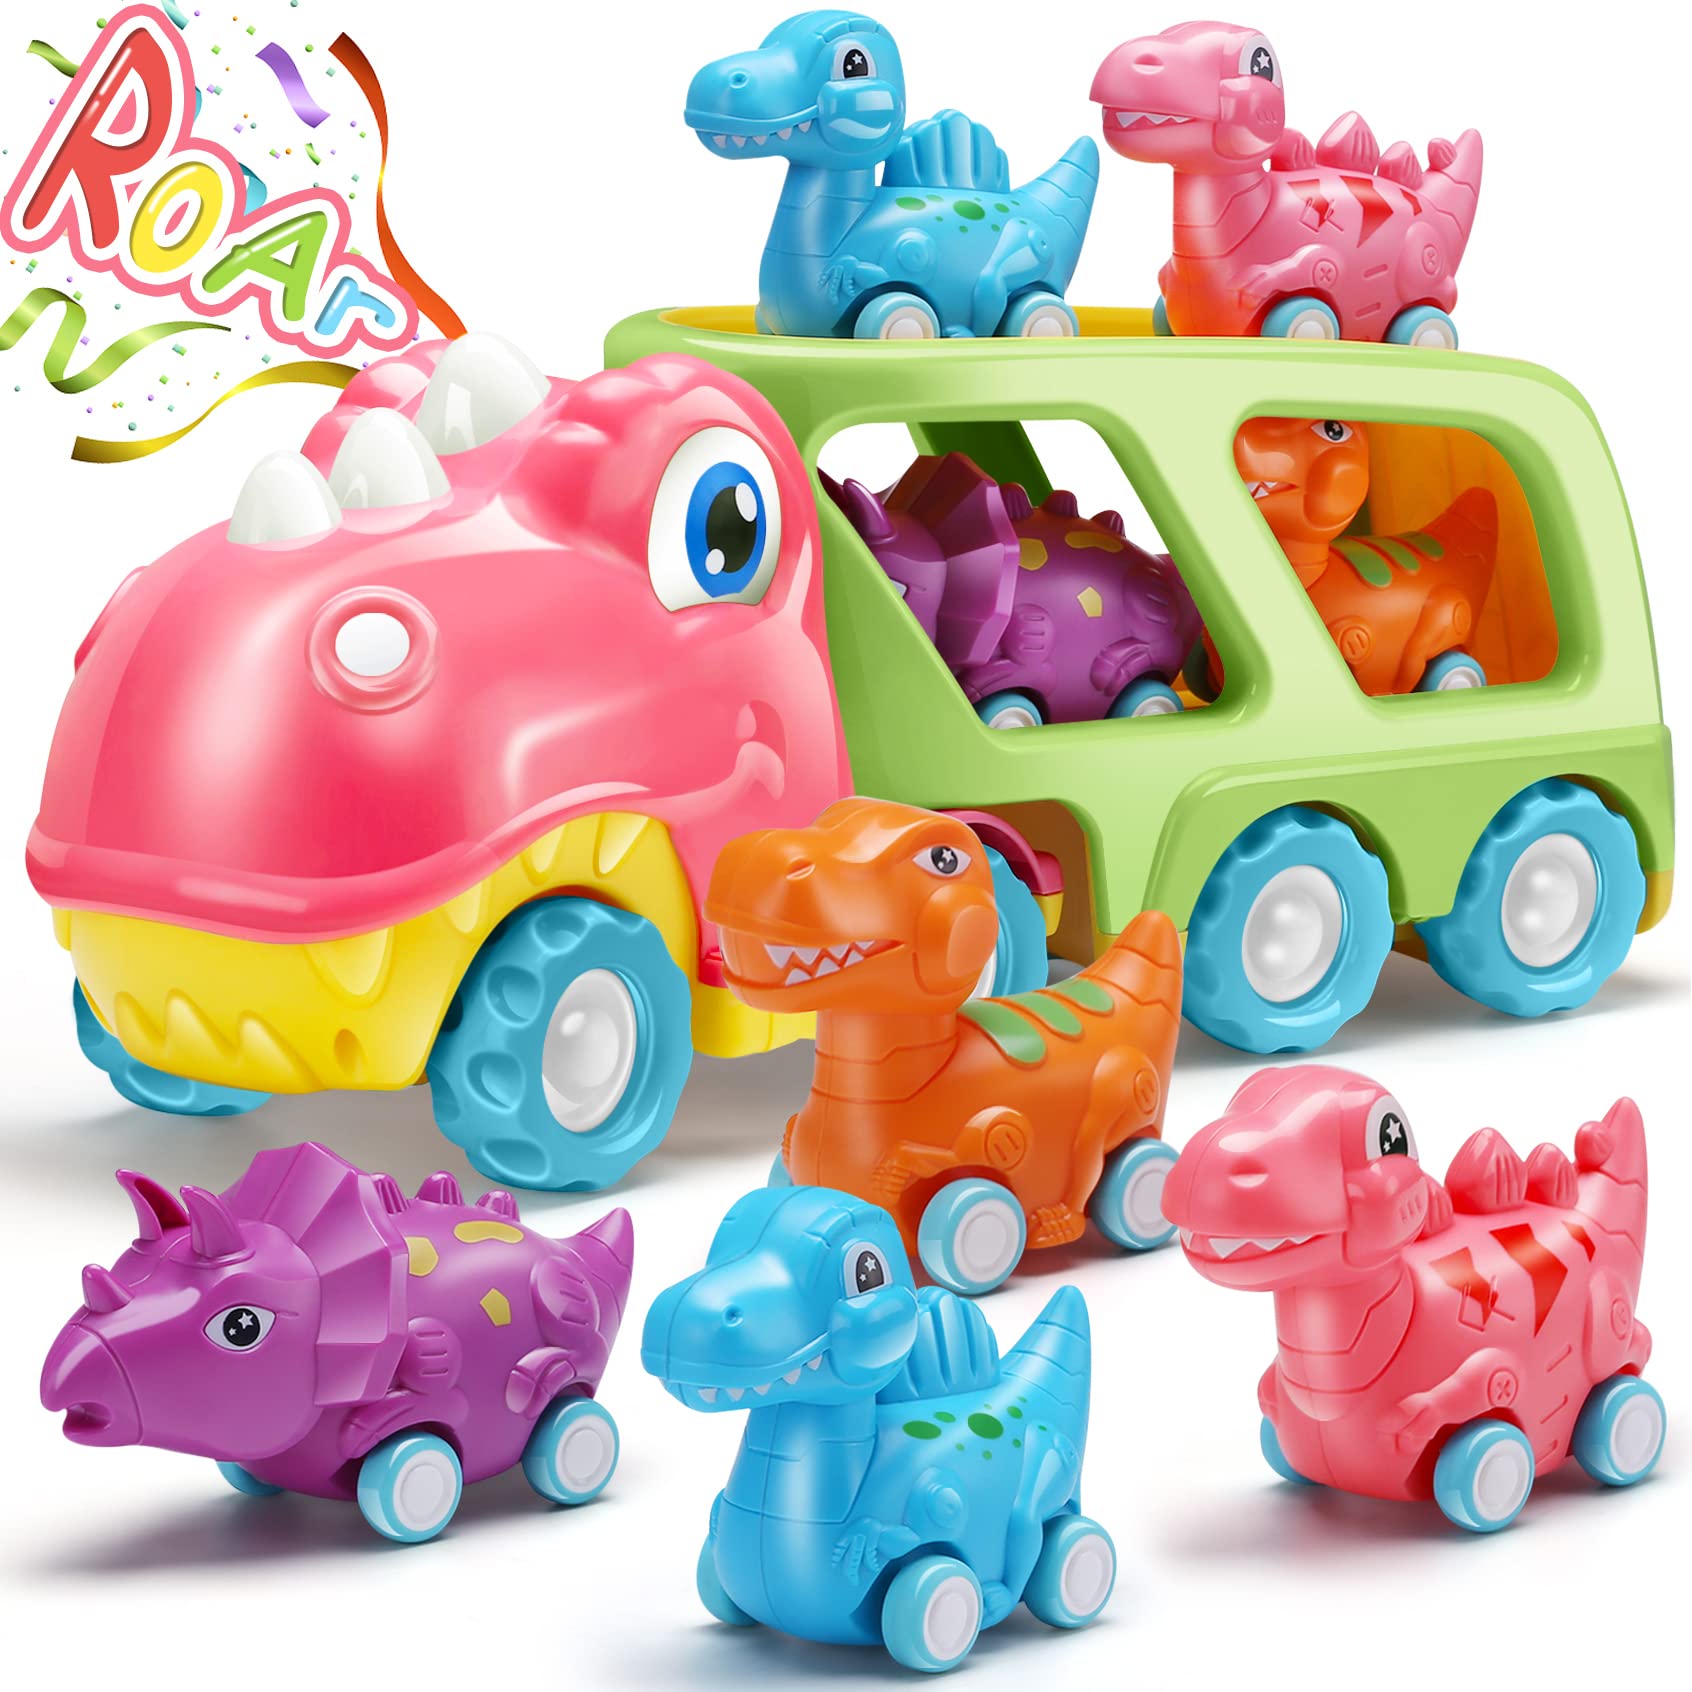 Bakatatoyz Dinosaur Car Toy